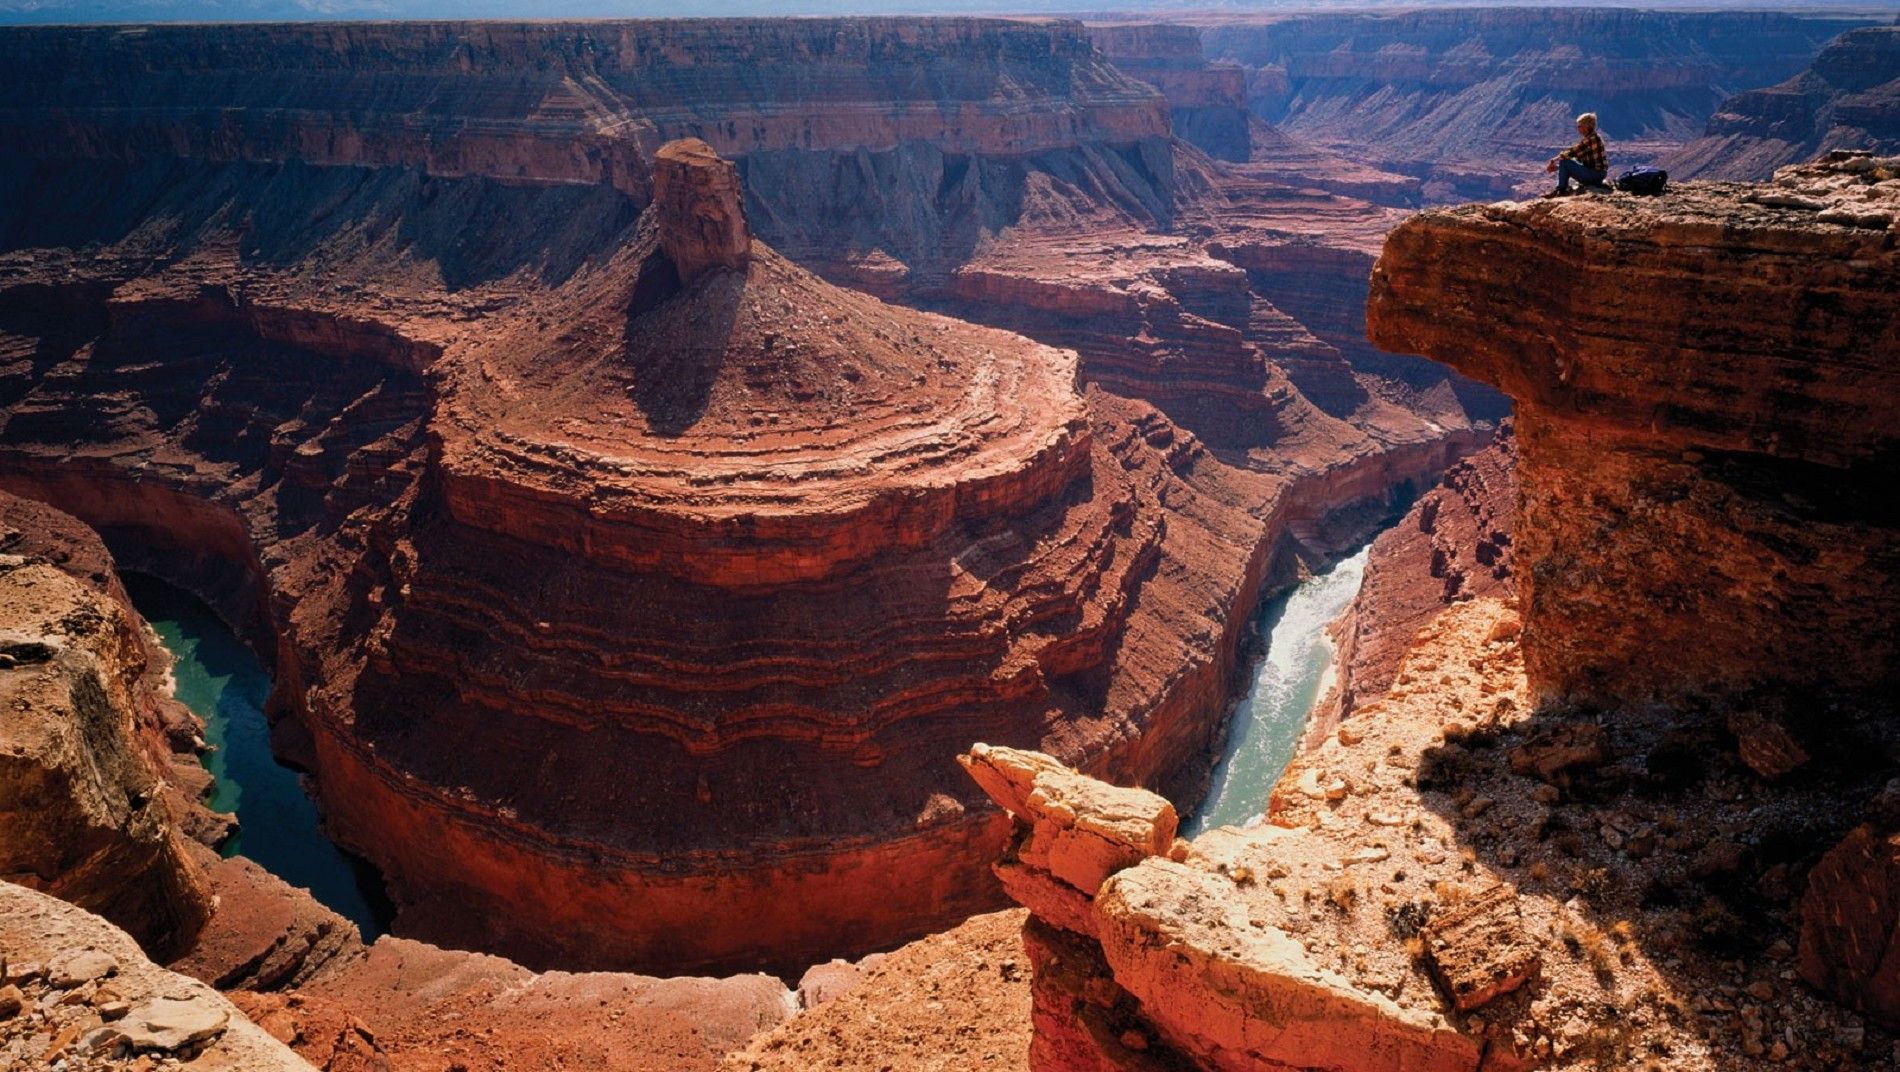 Wallpaper Photos Of Arizona Grand Canyon Amazing Photo